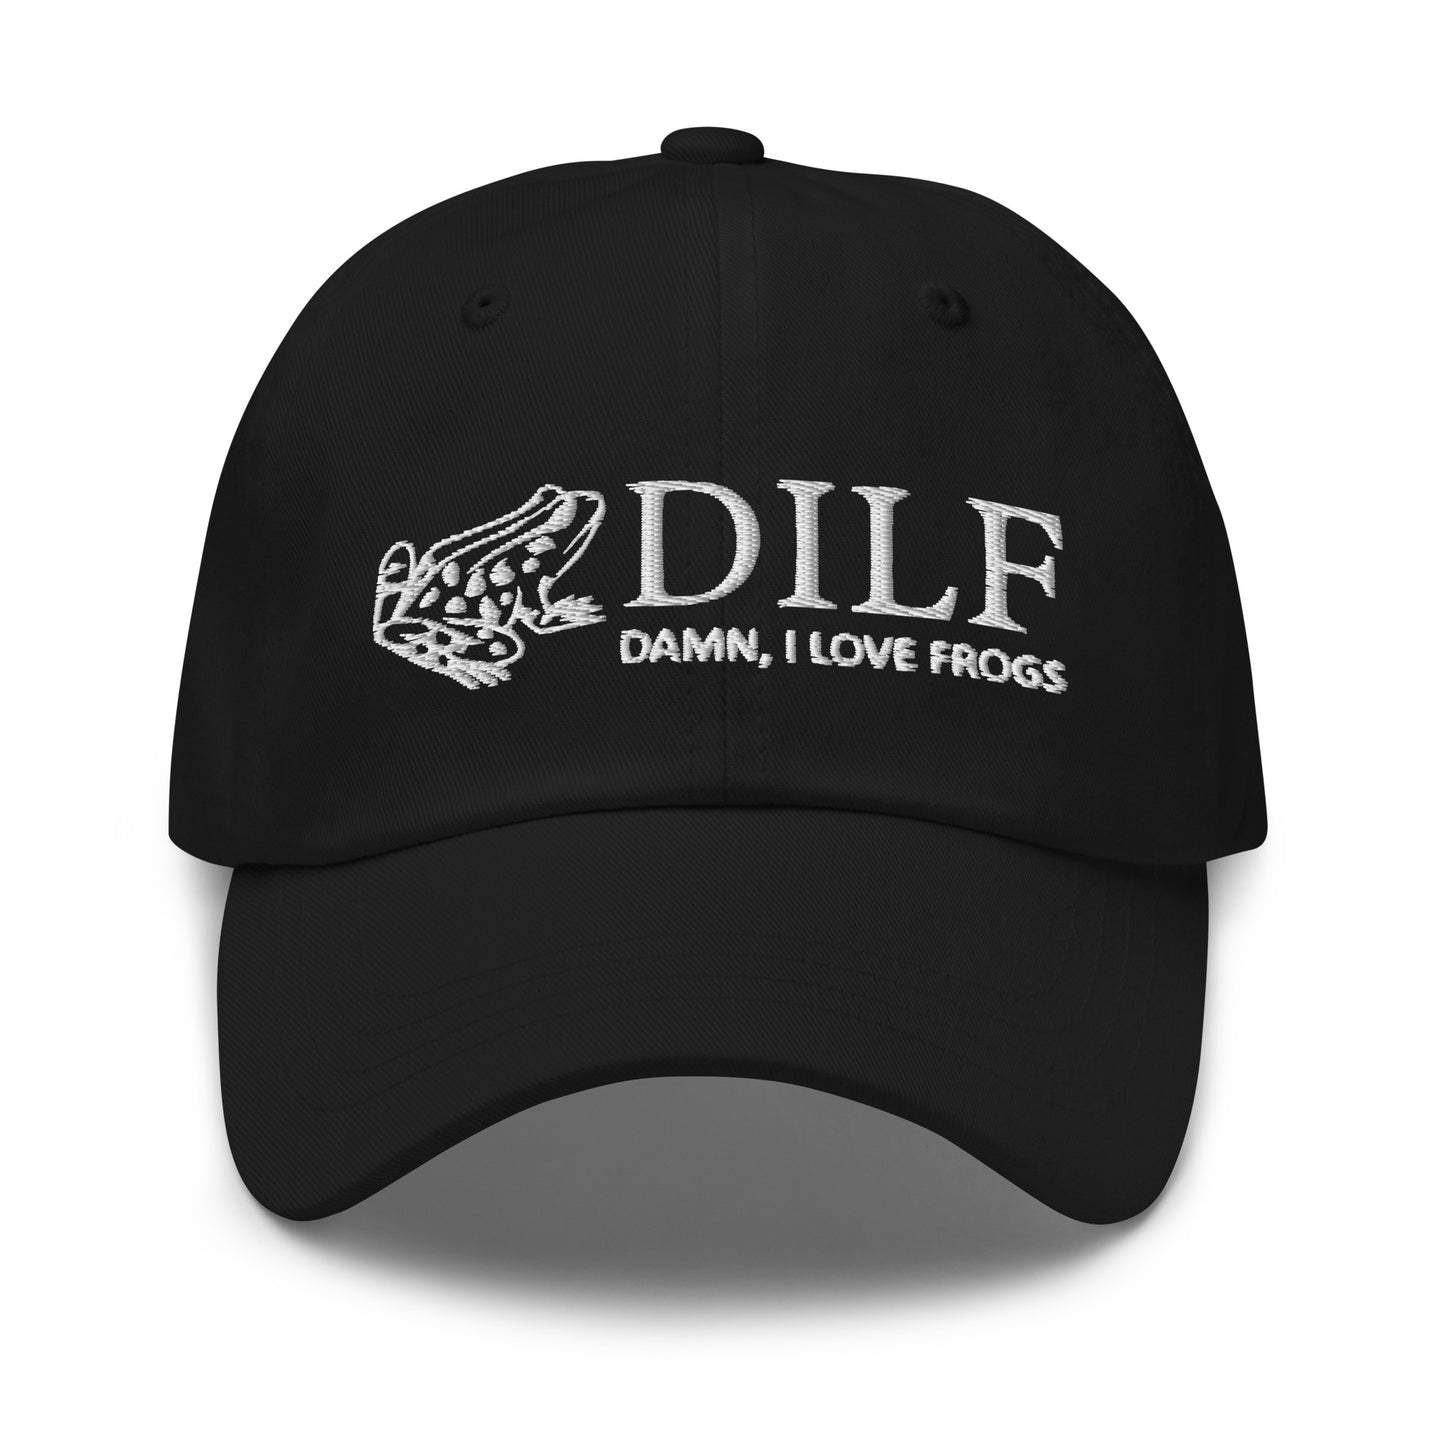 DILF (Damn, I Love Frogs) hat